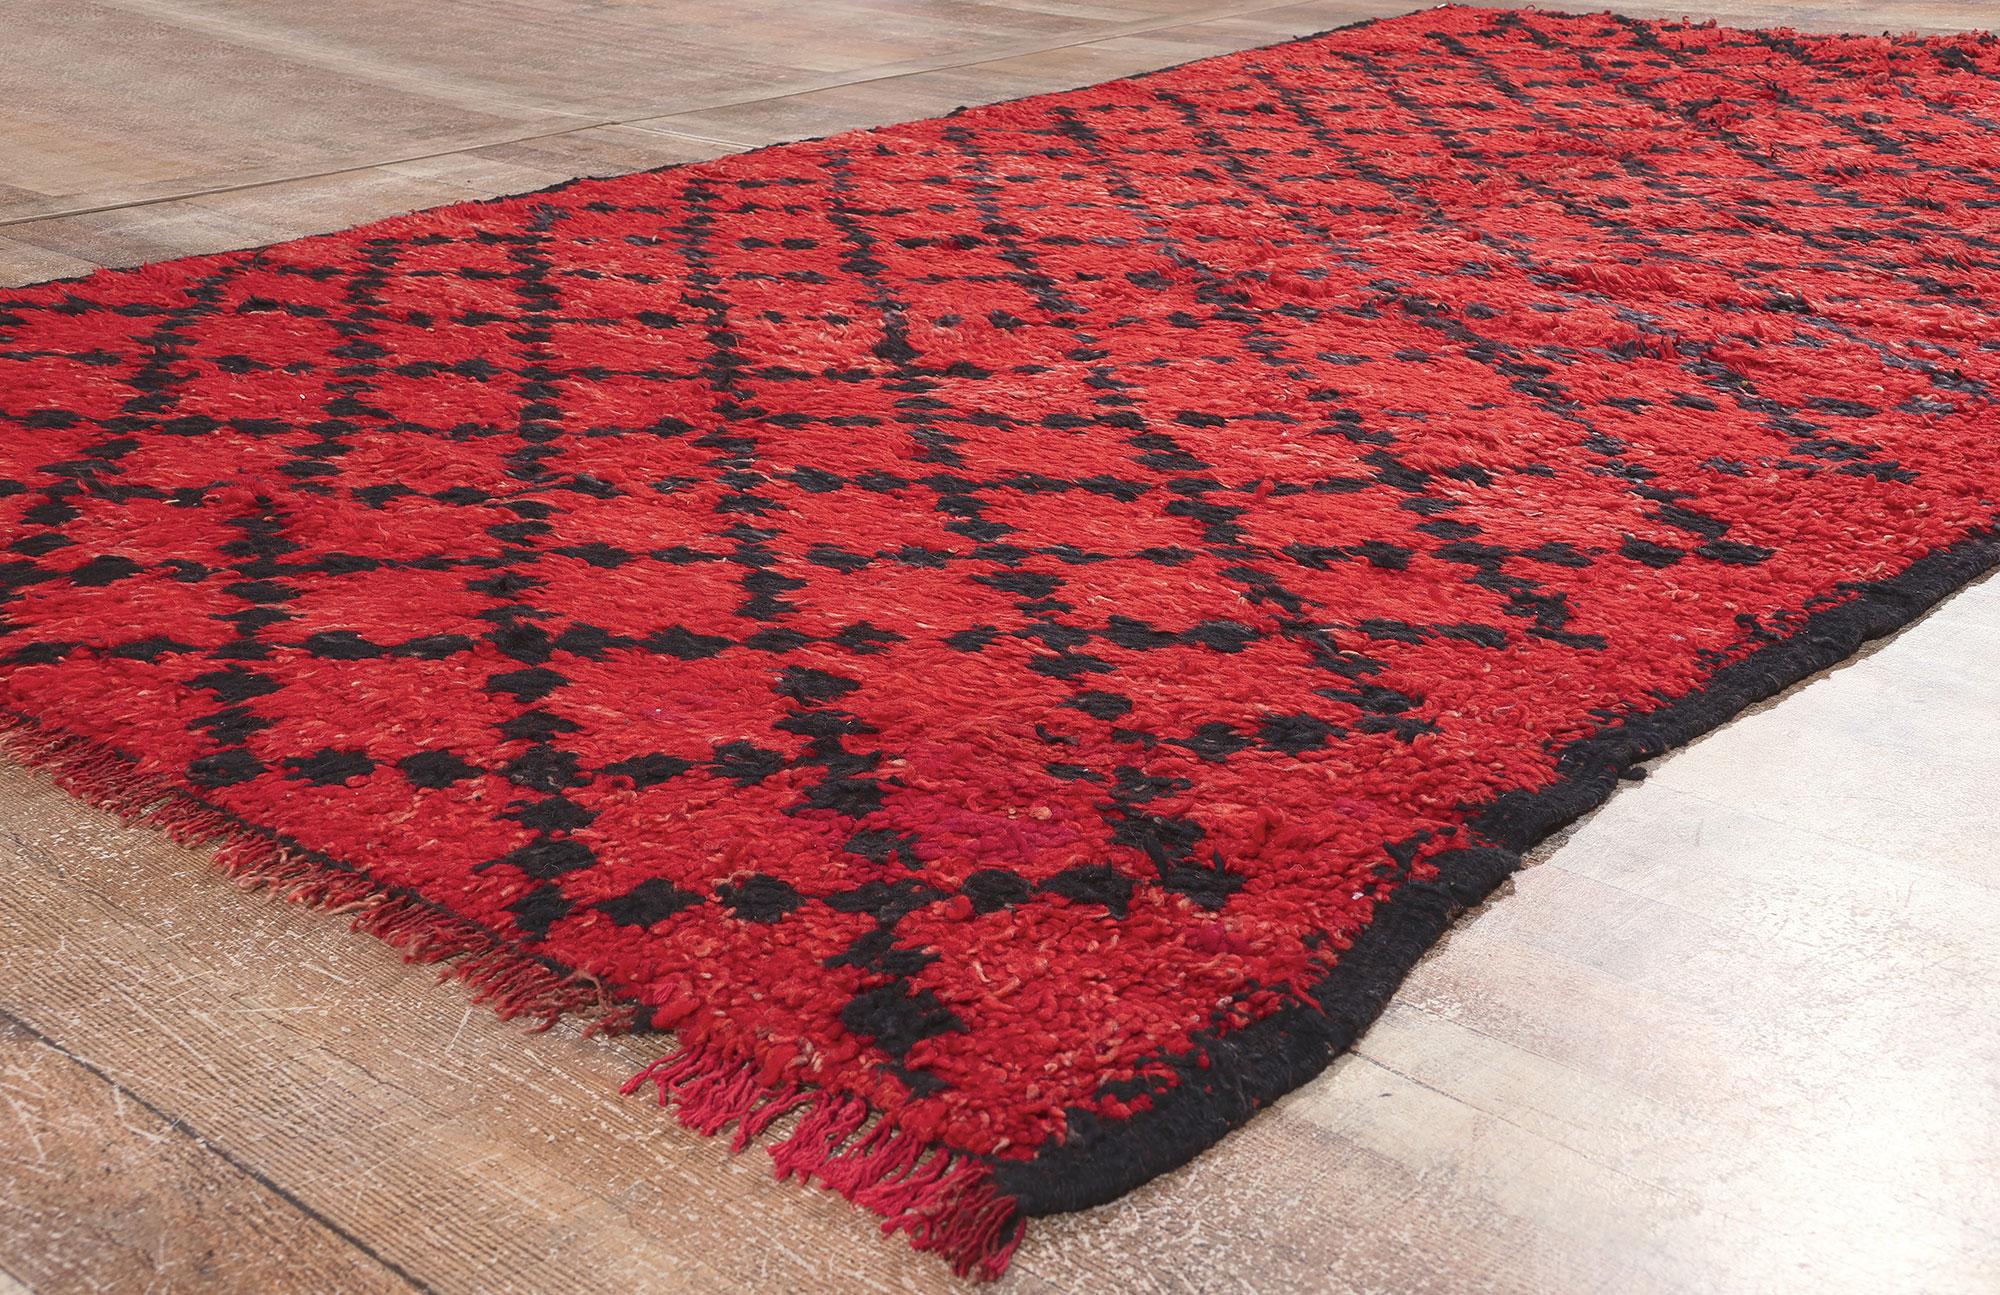 Wool Vintage Beni MGuild Moroccan Rug, Tribal Enchantment Meets Midcentury Modern  For Sale